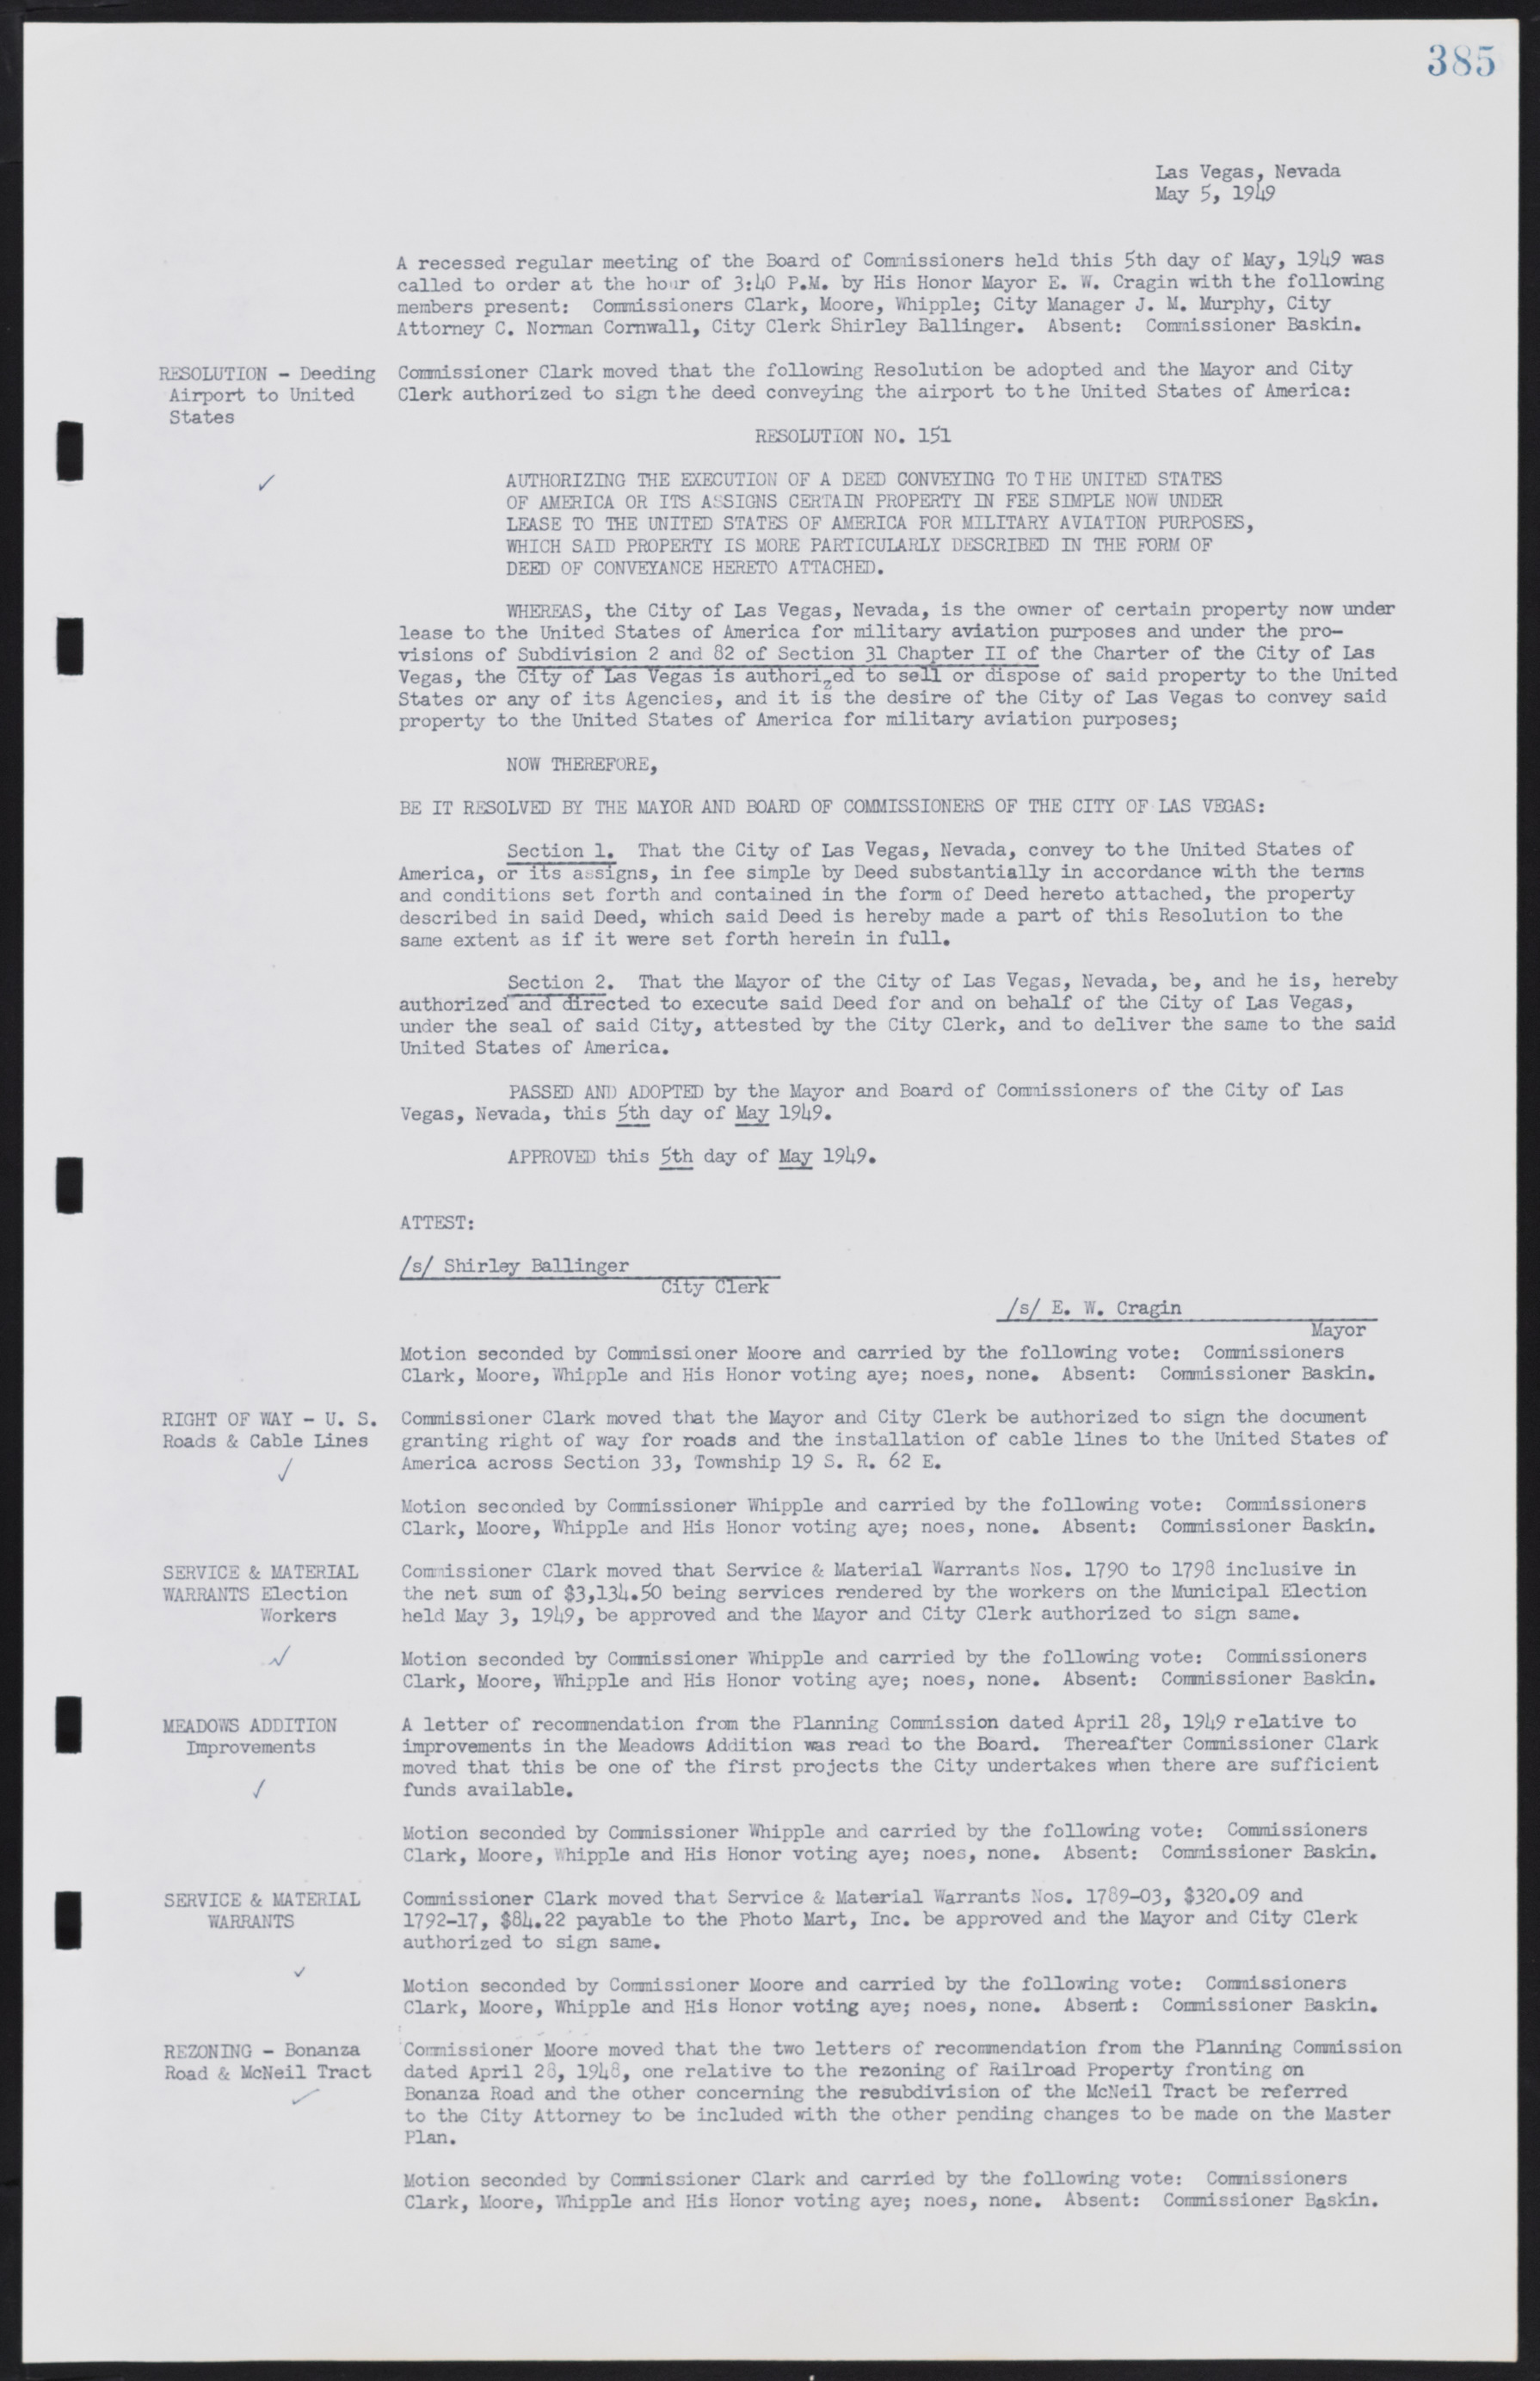 Las Vegas City Commission Minutes, January 7, 1947 to October 26, 1949, lvc000006-415